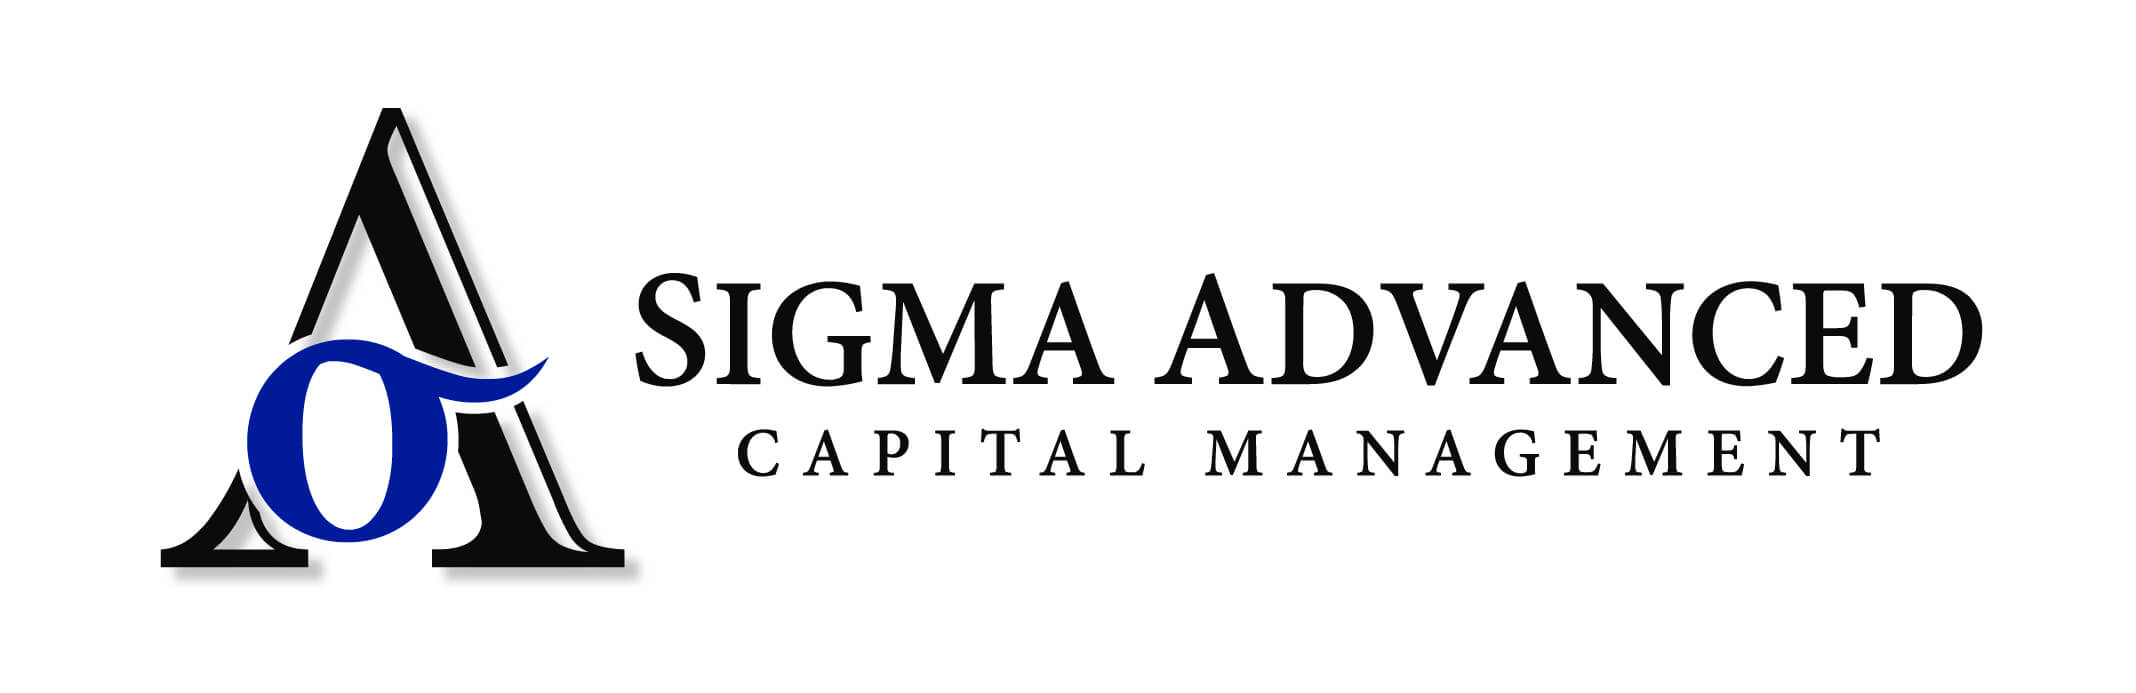 Winner Image - Sigma Advanced Capital Management